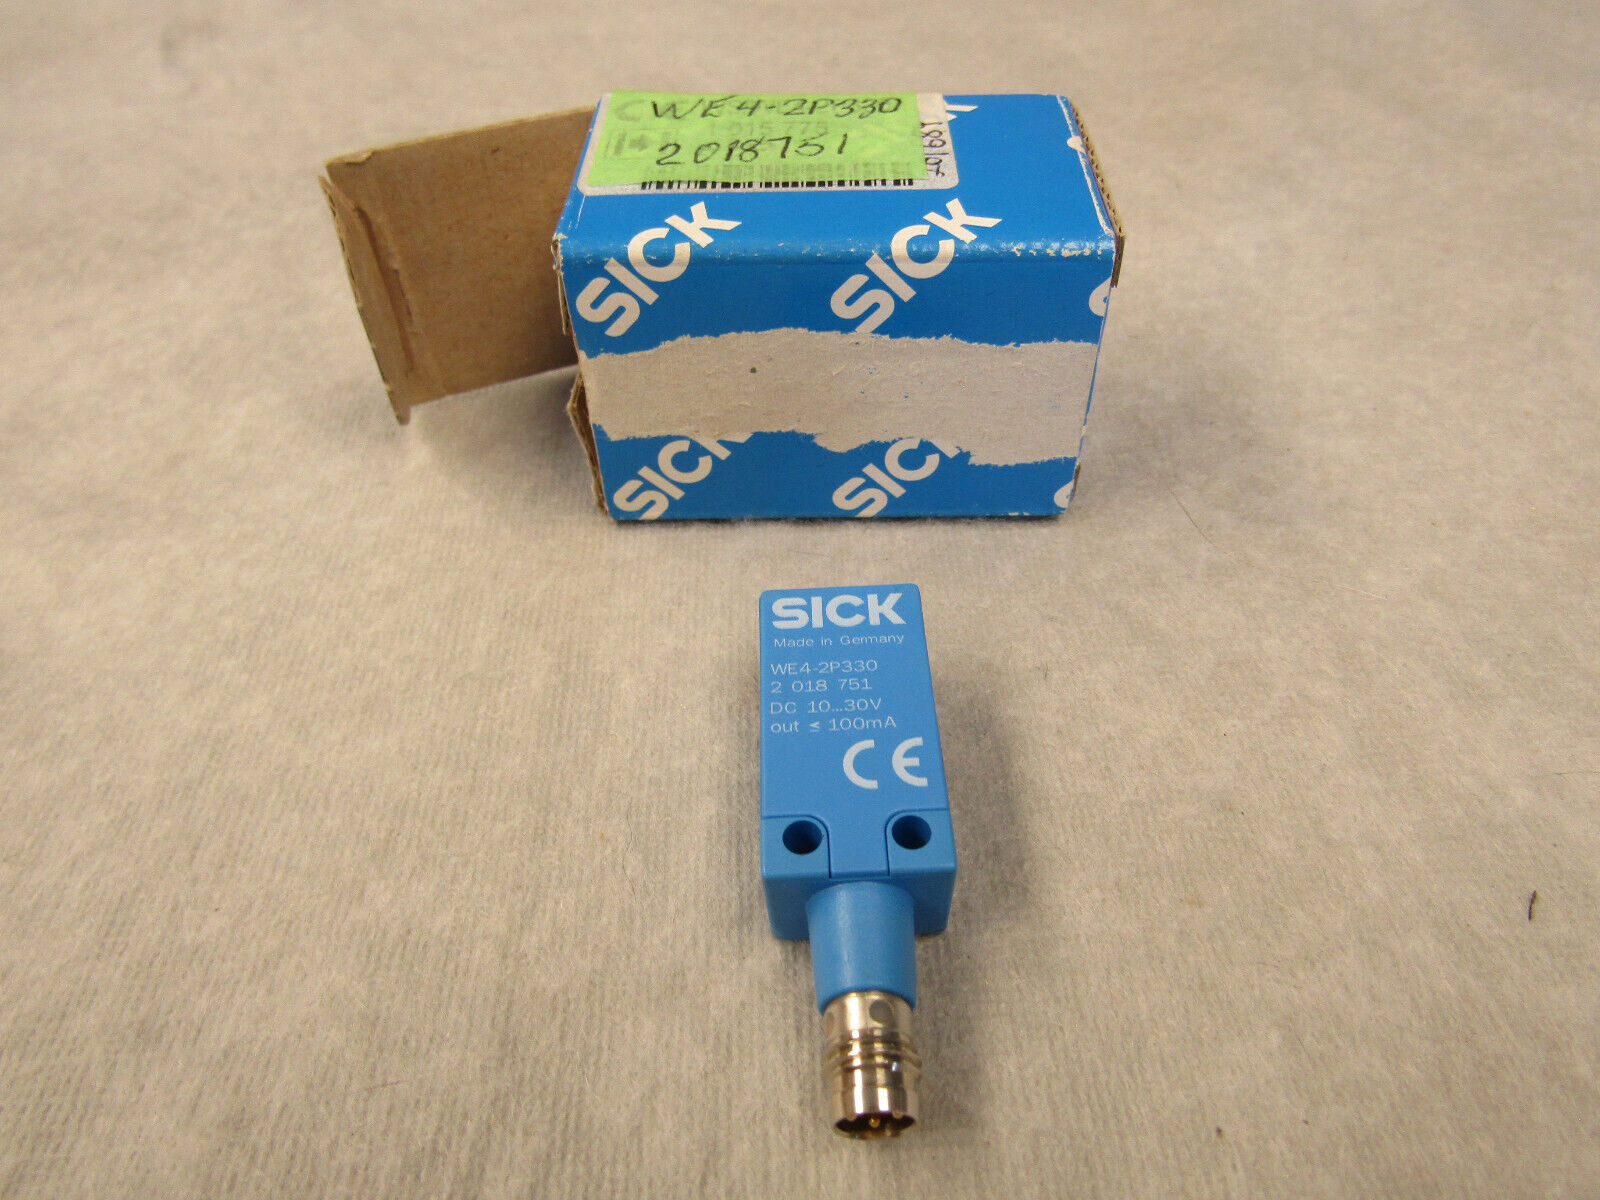 Sick WE4-2P330 Photoelectric Sensor 2018751